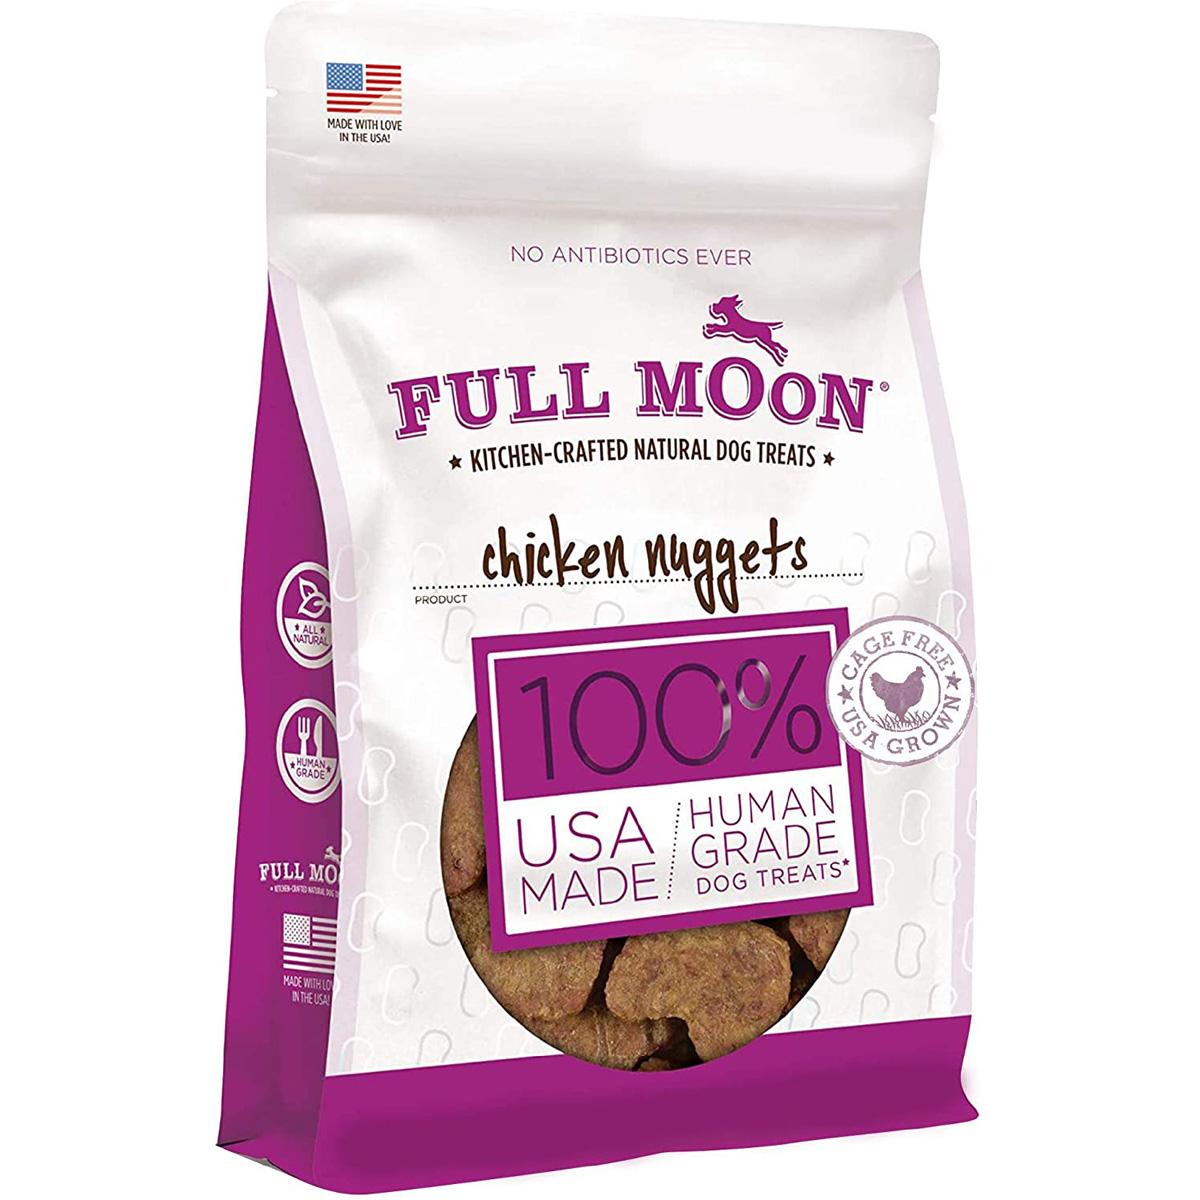 Full Moon All Natural Human Grade Chicken Nugget Dog Treats for $2.83 Shipped